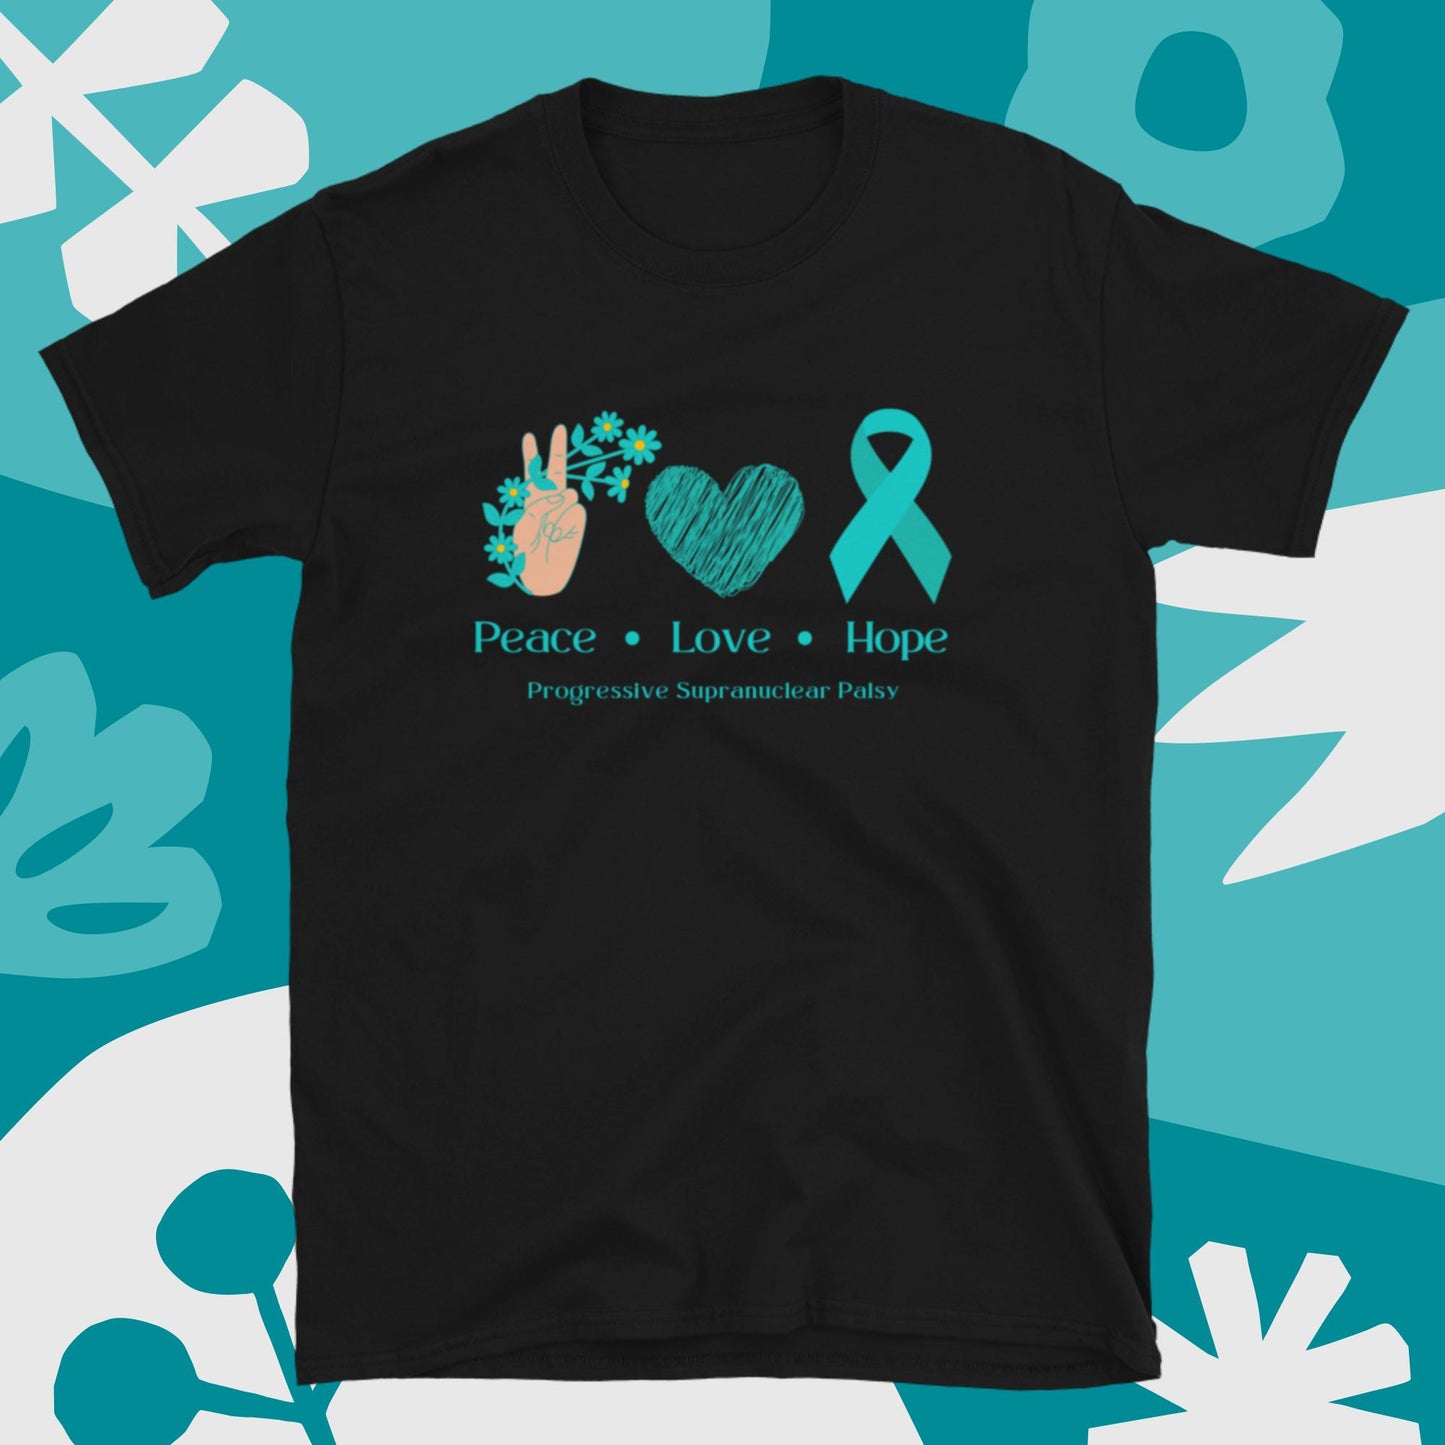 Progressive Supranuclear Palsy PEACE, LOVE, HOPE Short-Sleeve Unisex T-Shirt